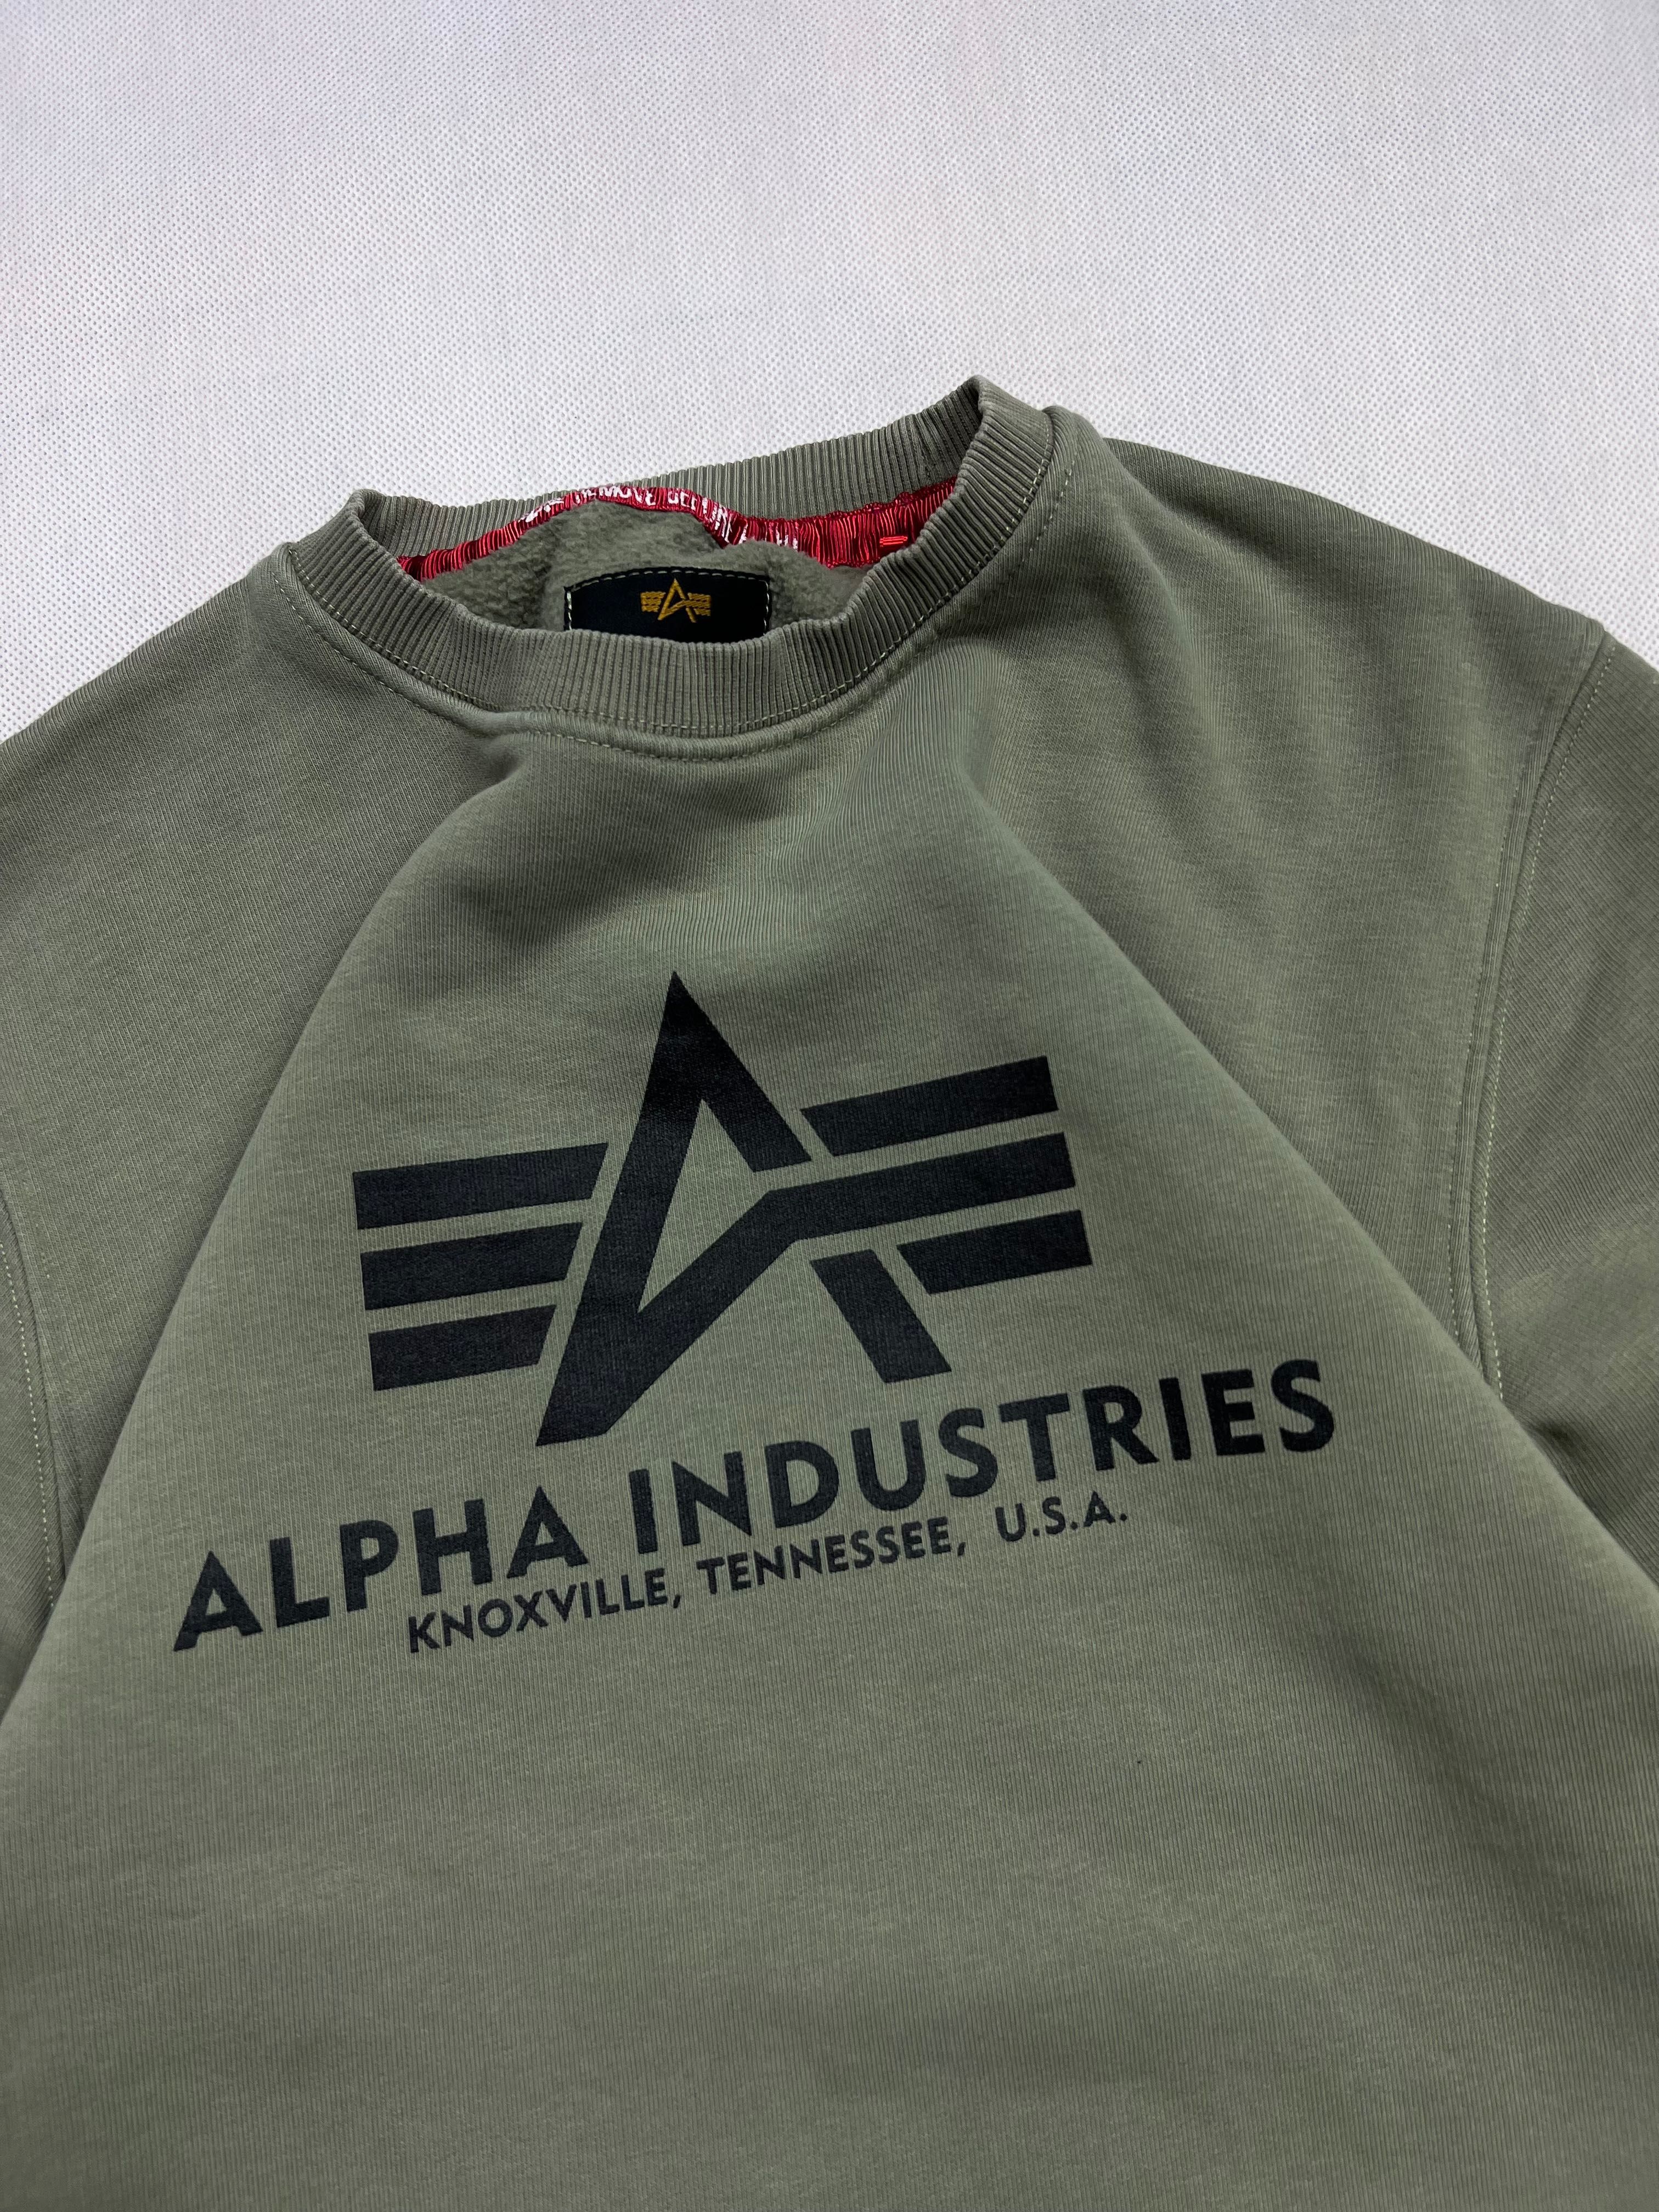 Bluza Alpha Industries knoxville USA